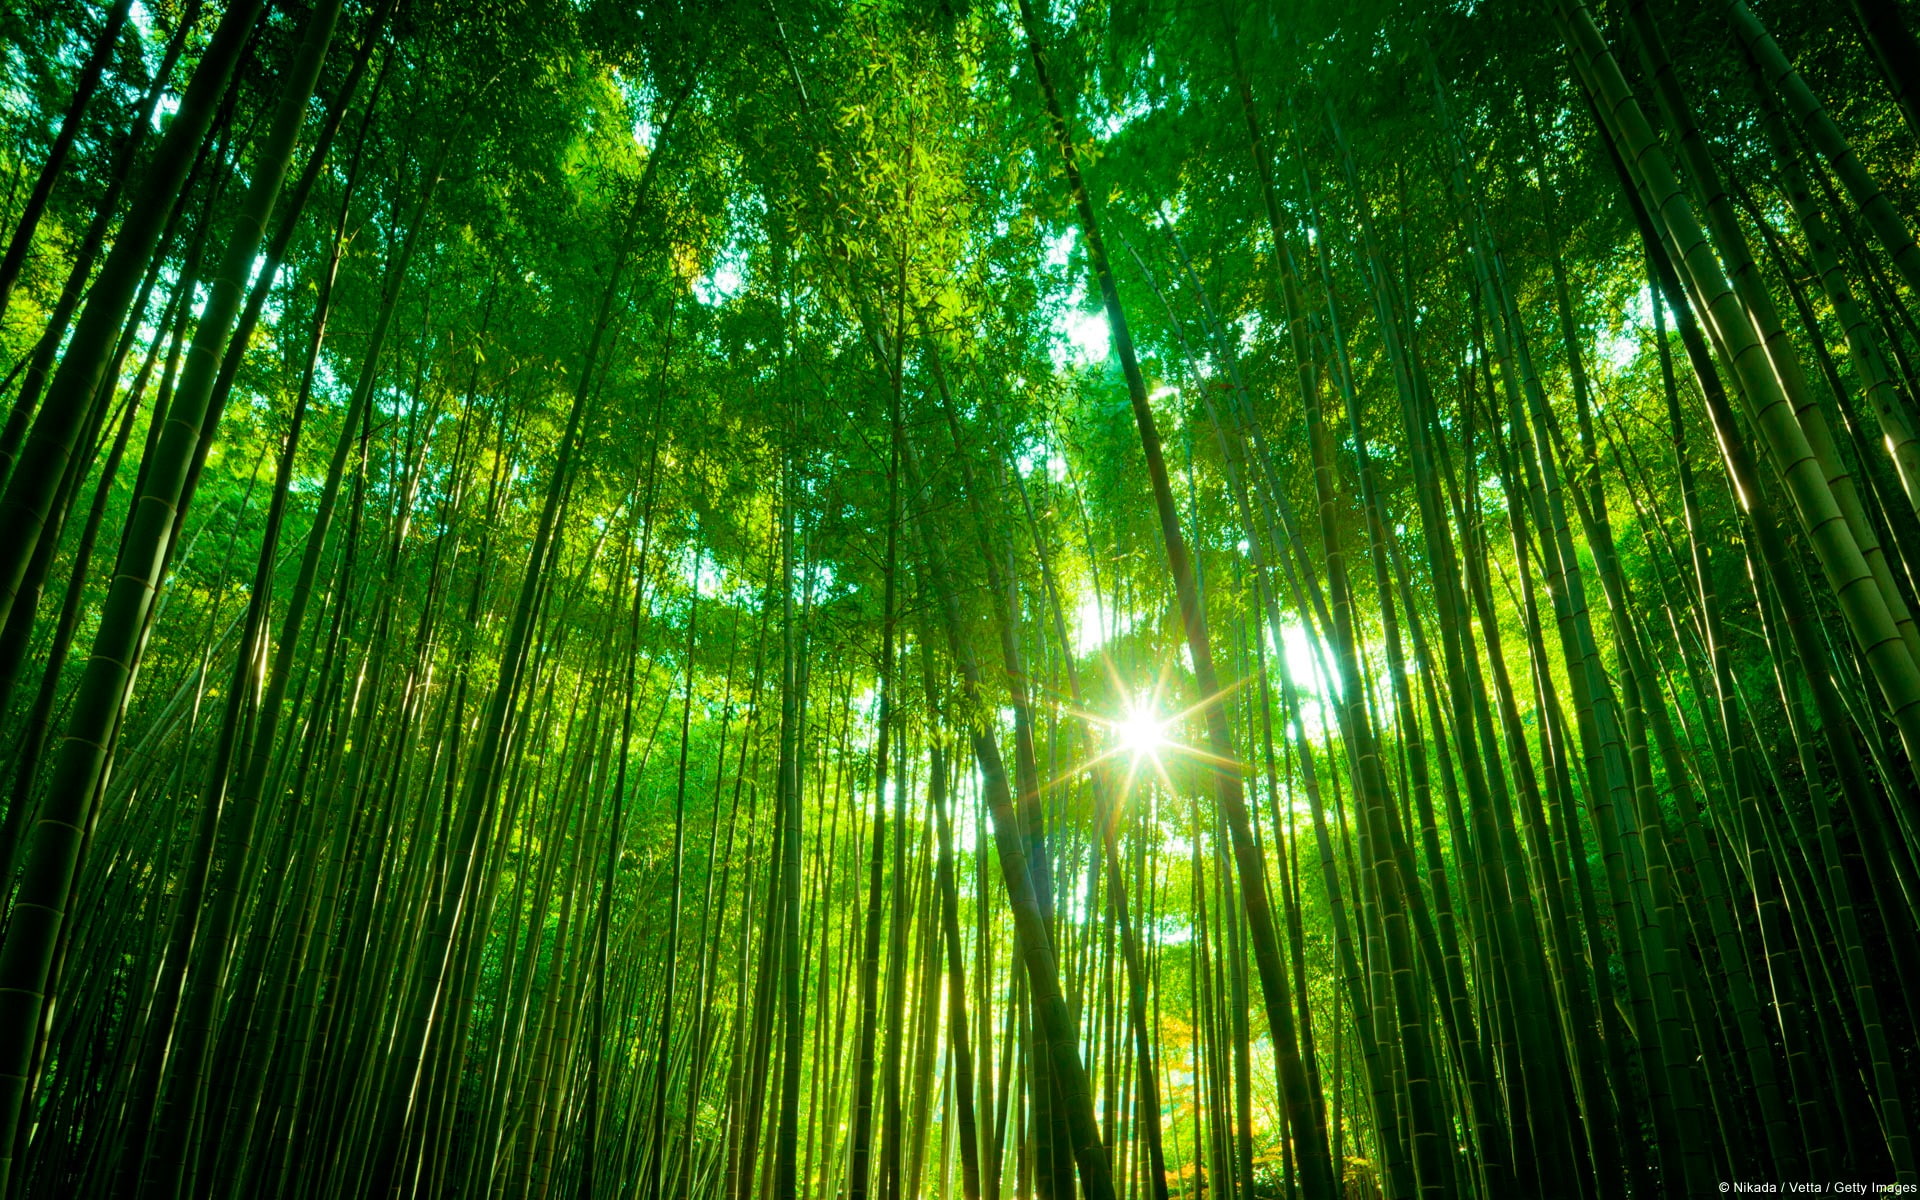 Bamboo Japan-Windows theme HD wallpaper, green bamboo trees, low angle view